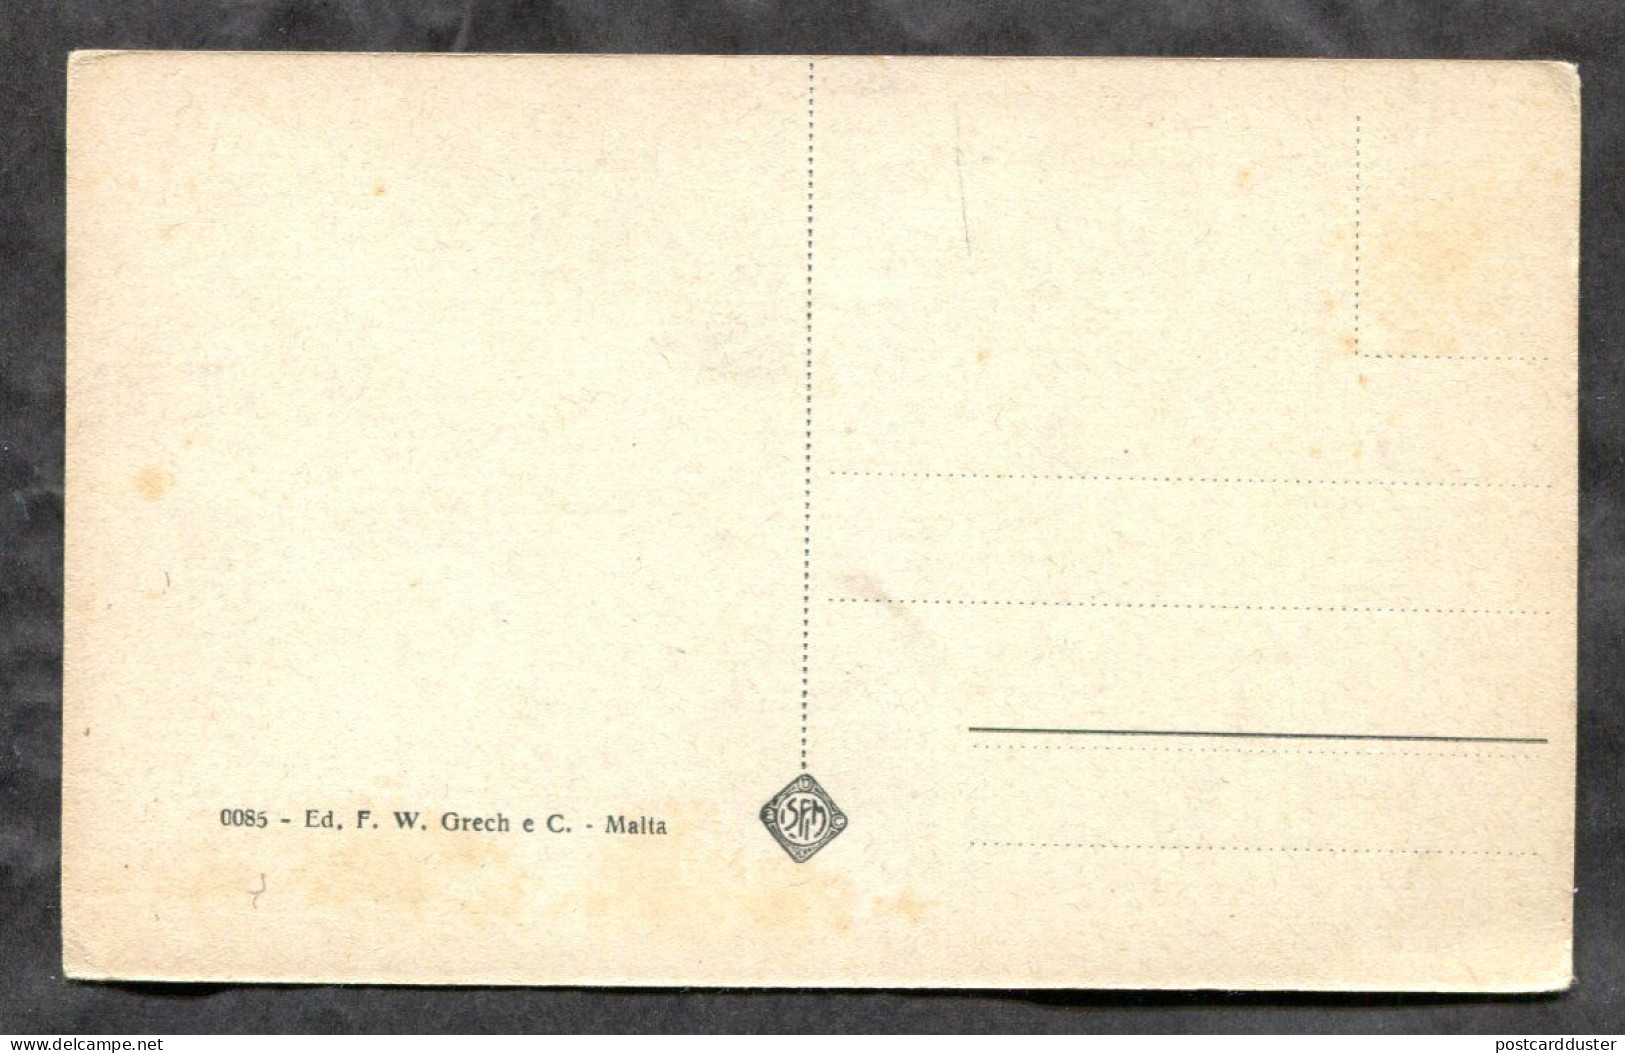 MALTA 1920s Mohammedian Cemetery. Islam. Postcard (h1821) - Malta